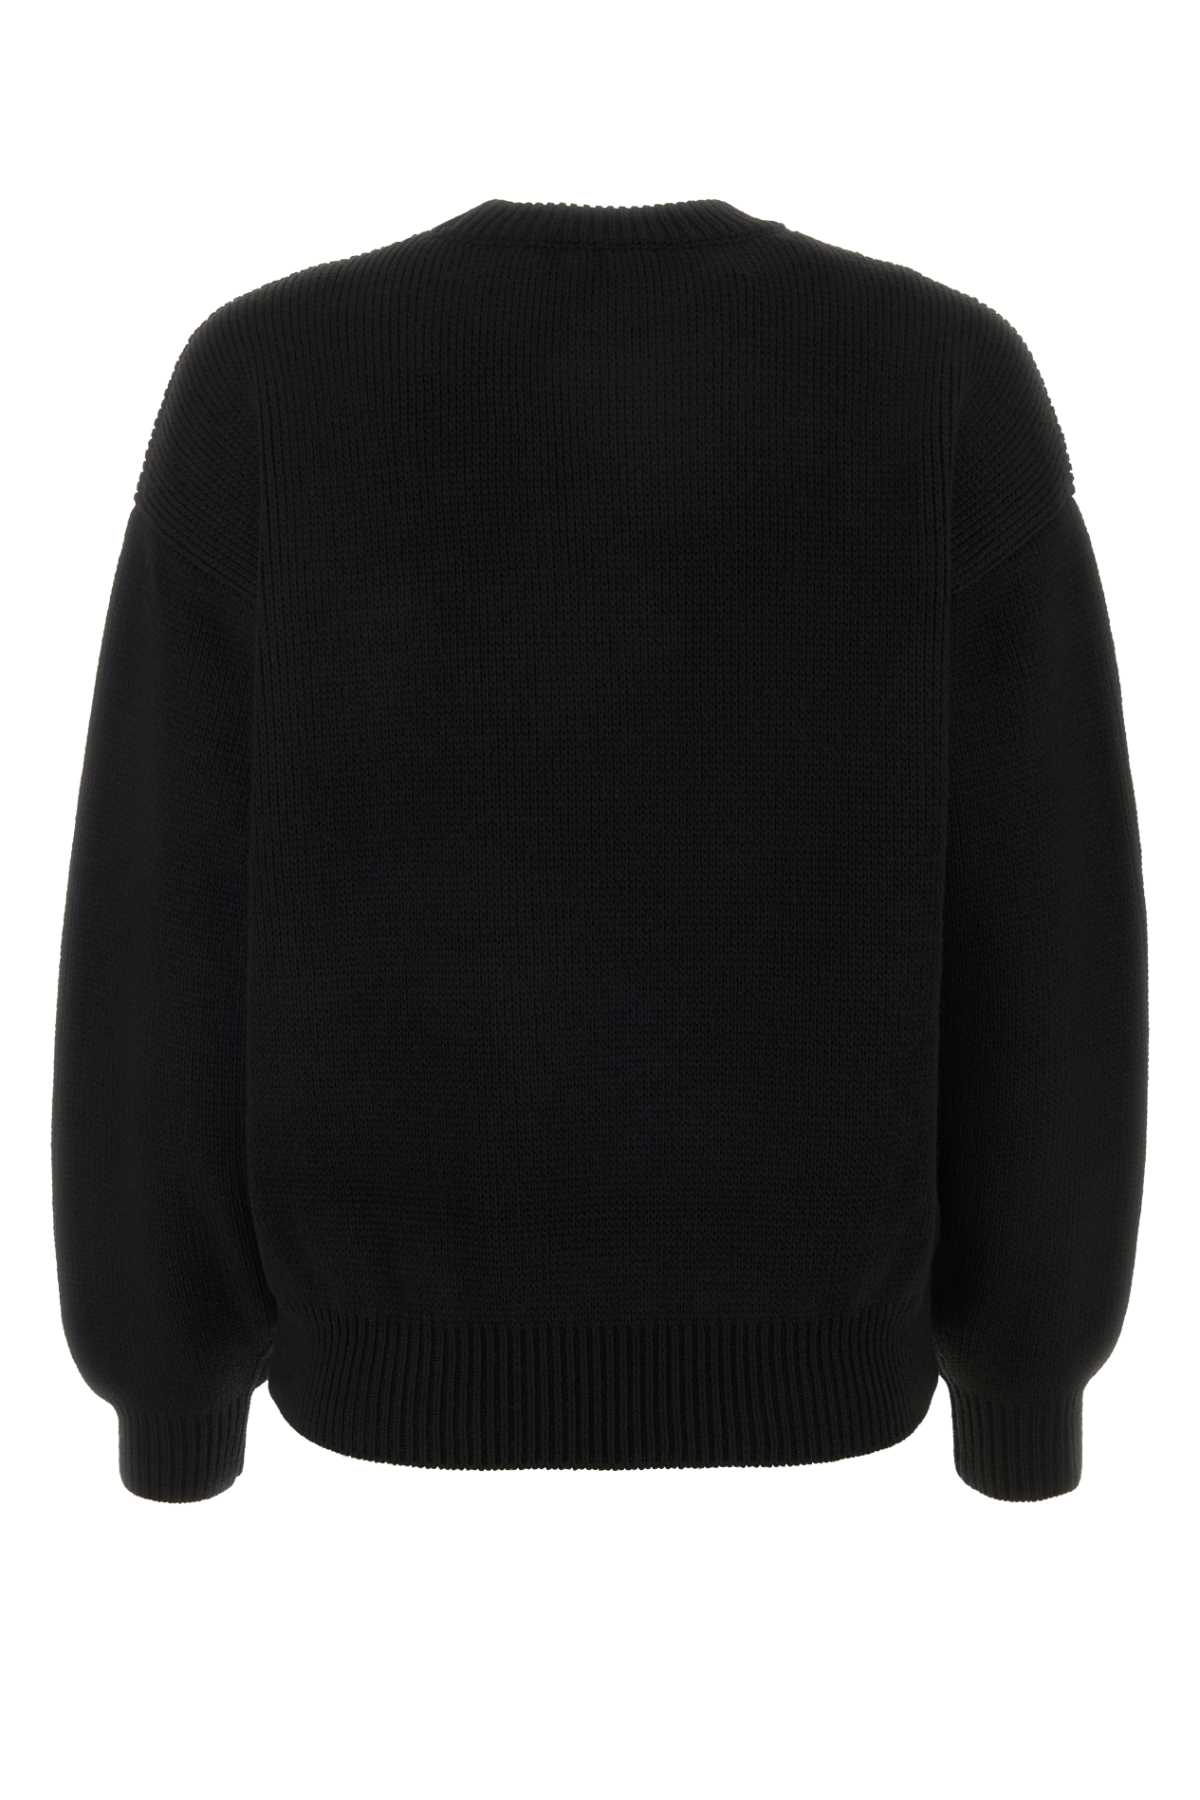 Alexander Wang T Black Acrylic Blend Sweater